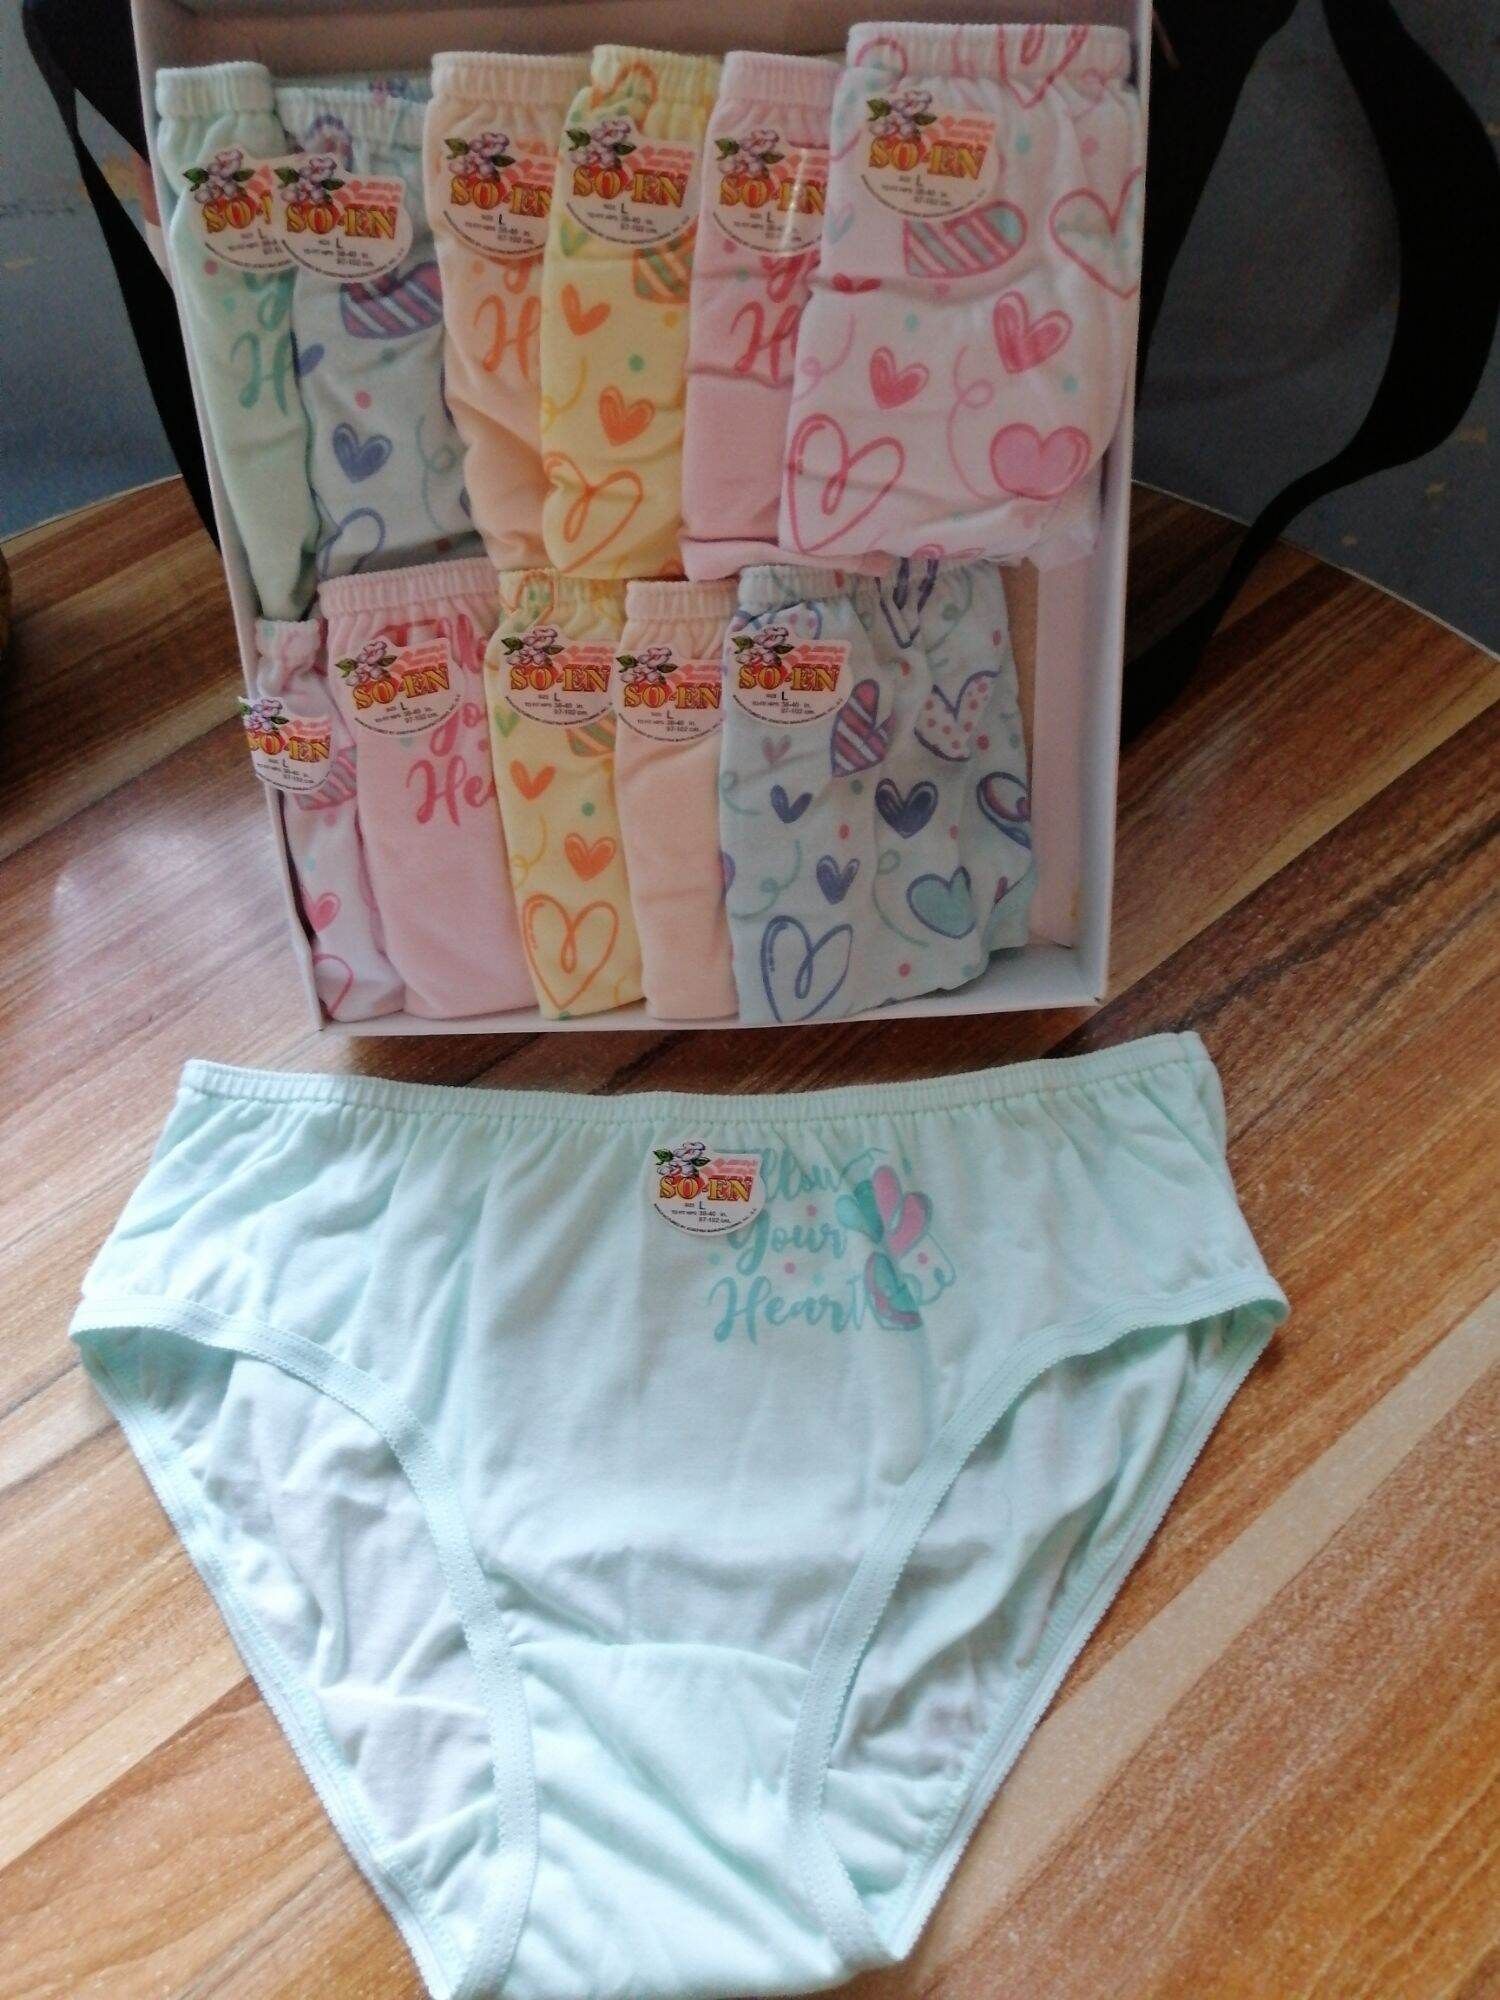 BCI Original 12pcs / 1box SOEN Panty For Women's Available All Size Random  Color and Design BCI Bikini Style